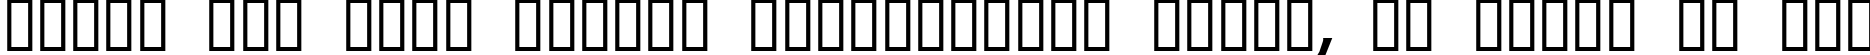 Пример написания шрифтом Brian James Condensed Bold текста на русском